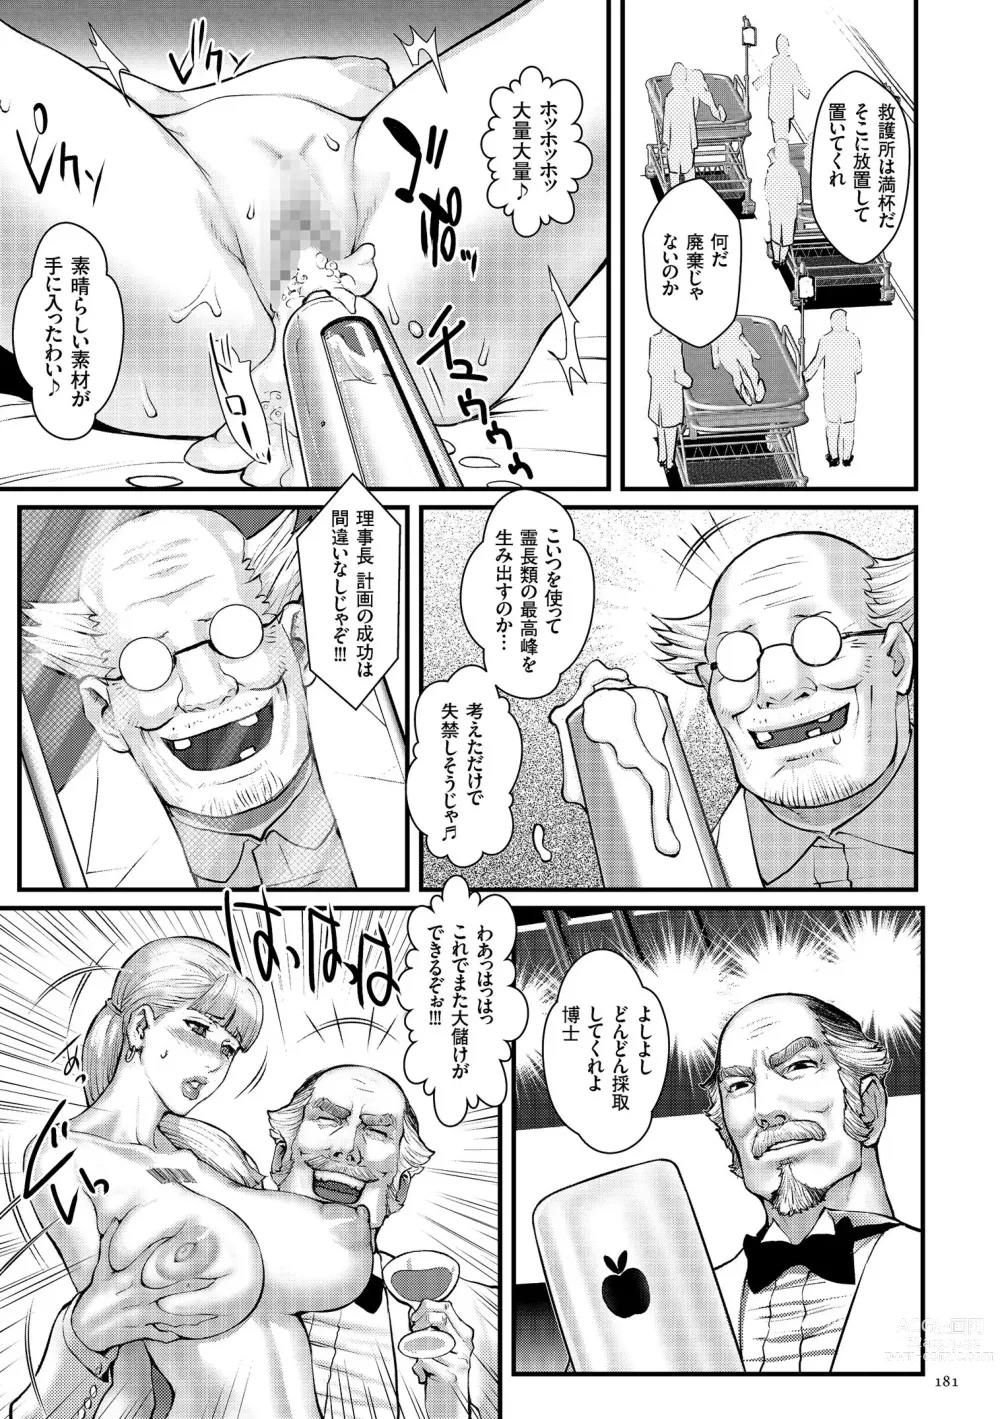 Page 183 of manga Chakushou! Haramase Island